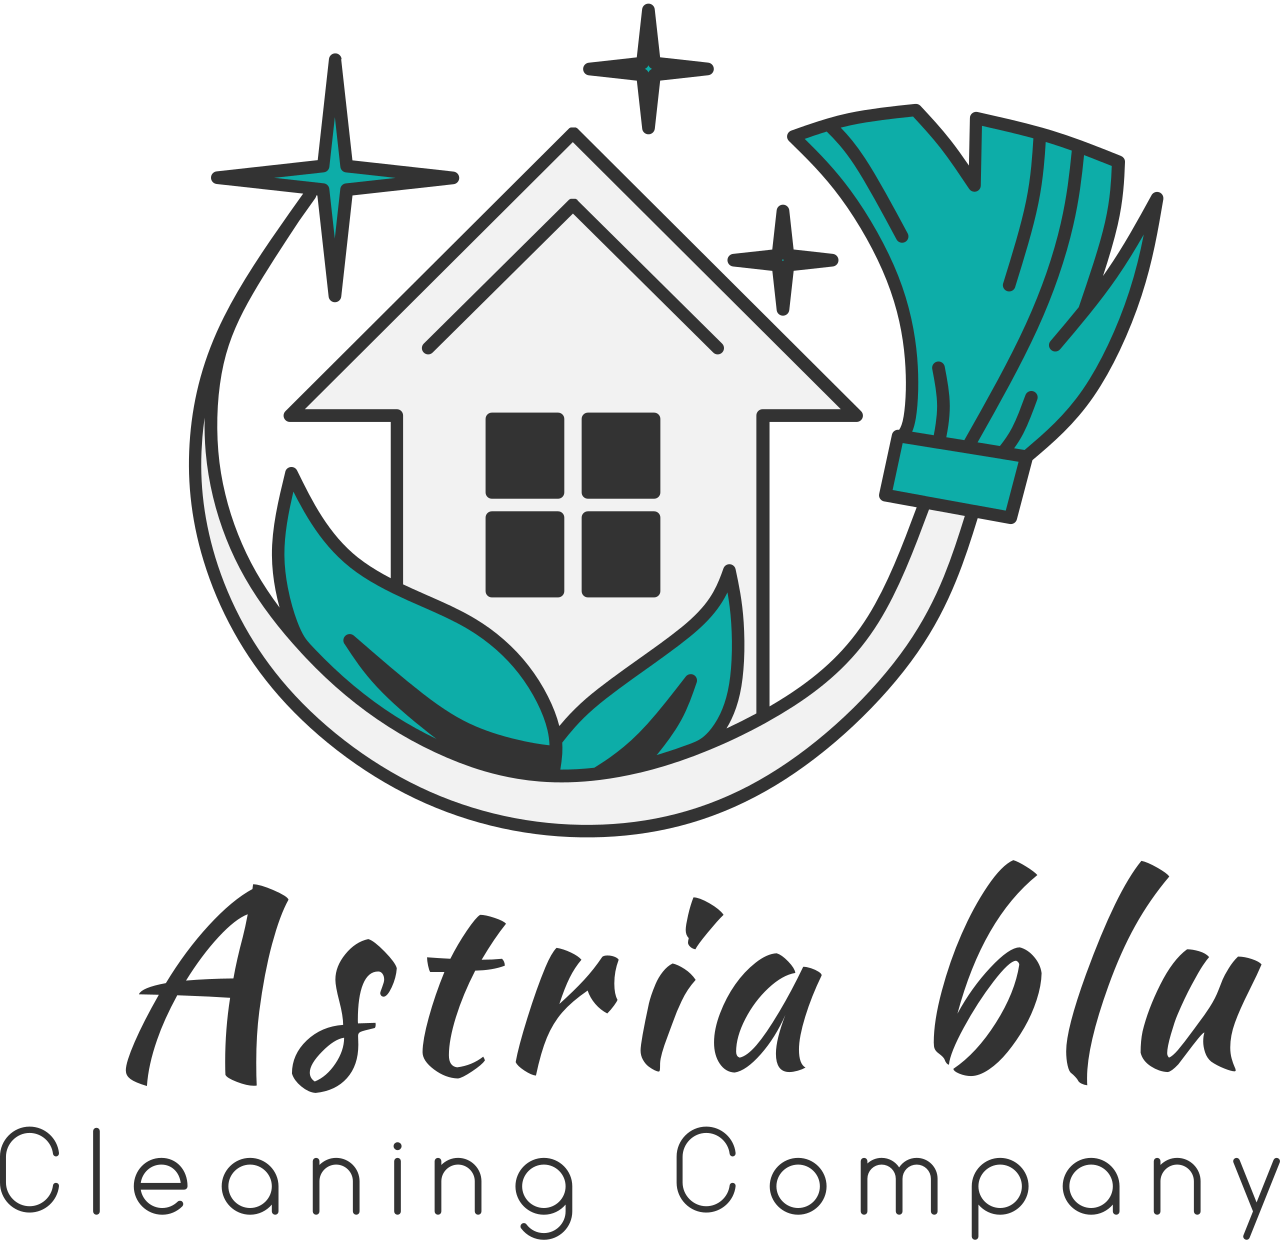 Astria blu's logo